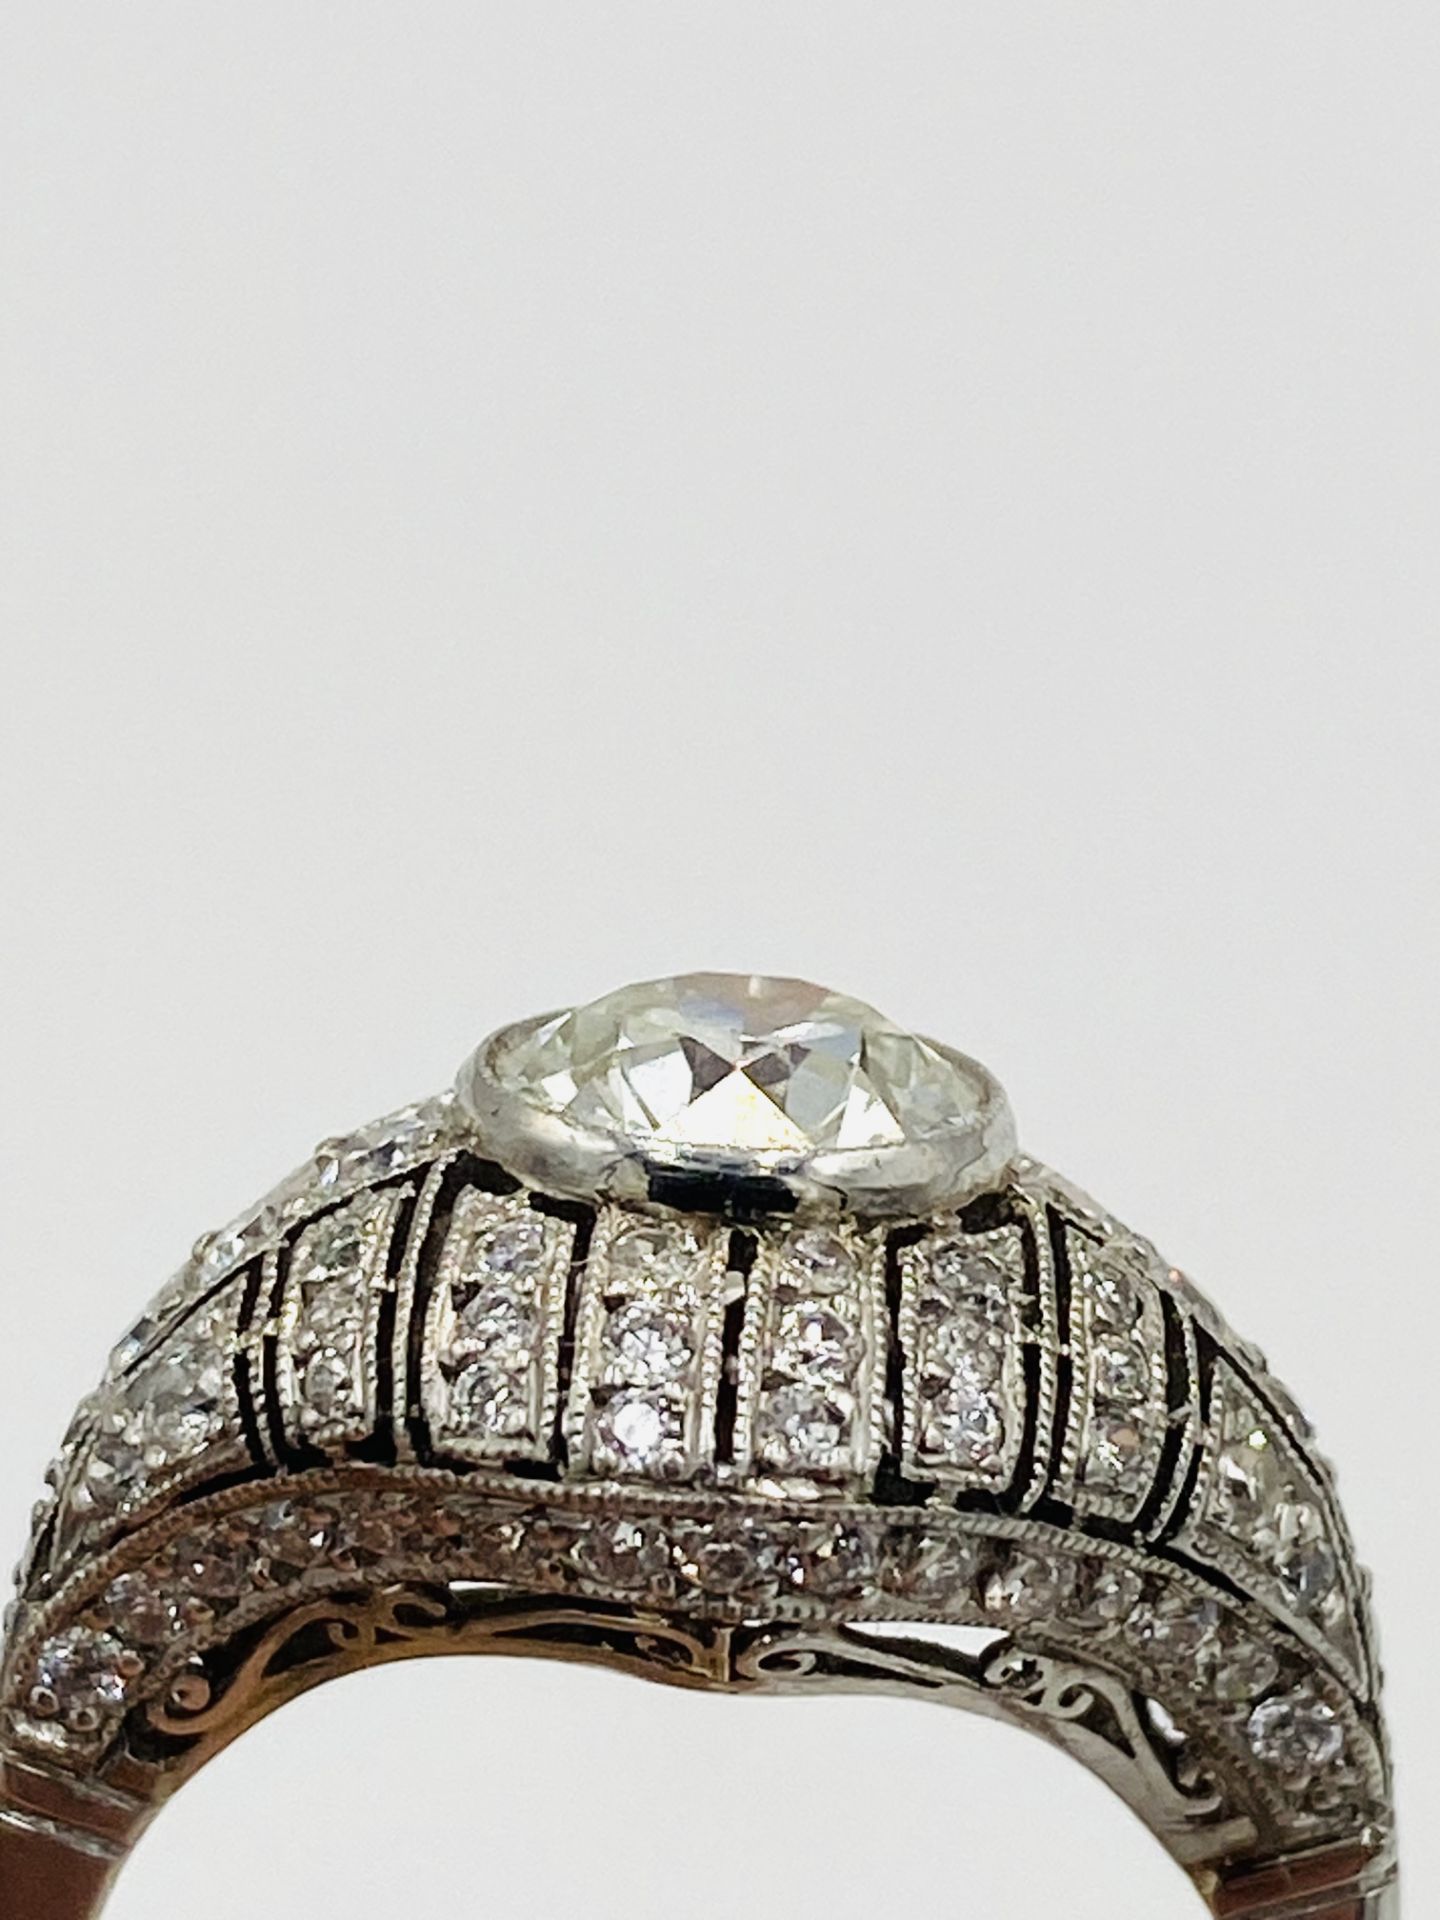 Platinum and diamond ring - Image 6 of 6